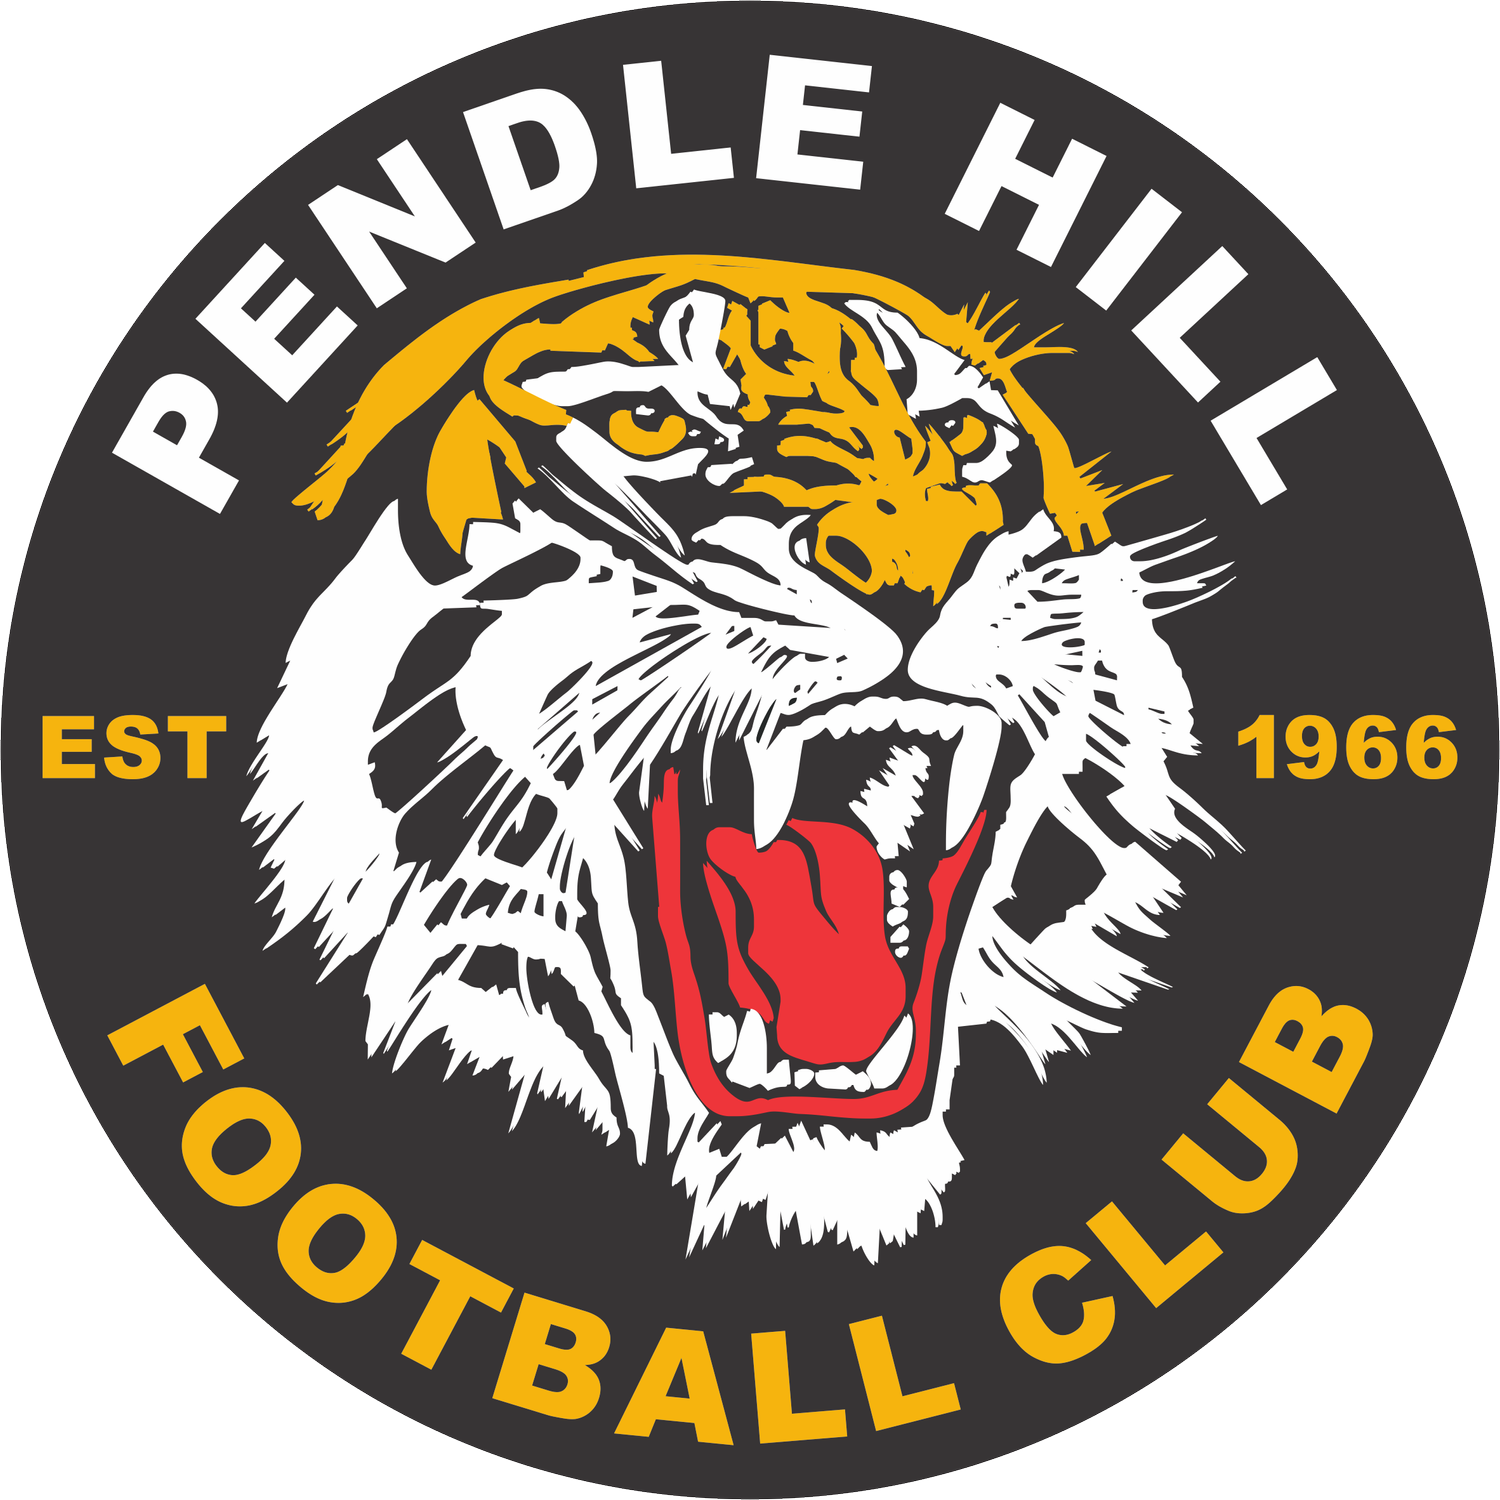 Pendle Hill FC